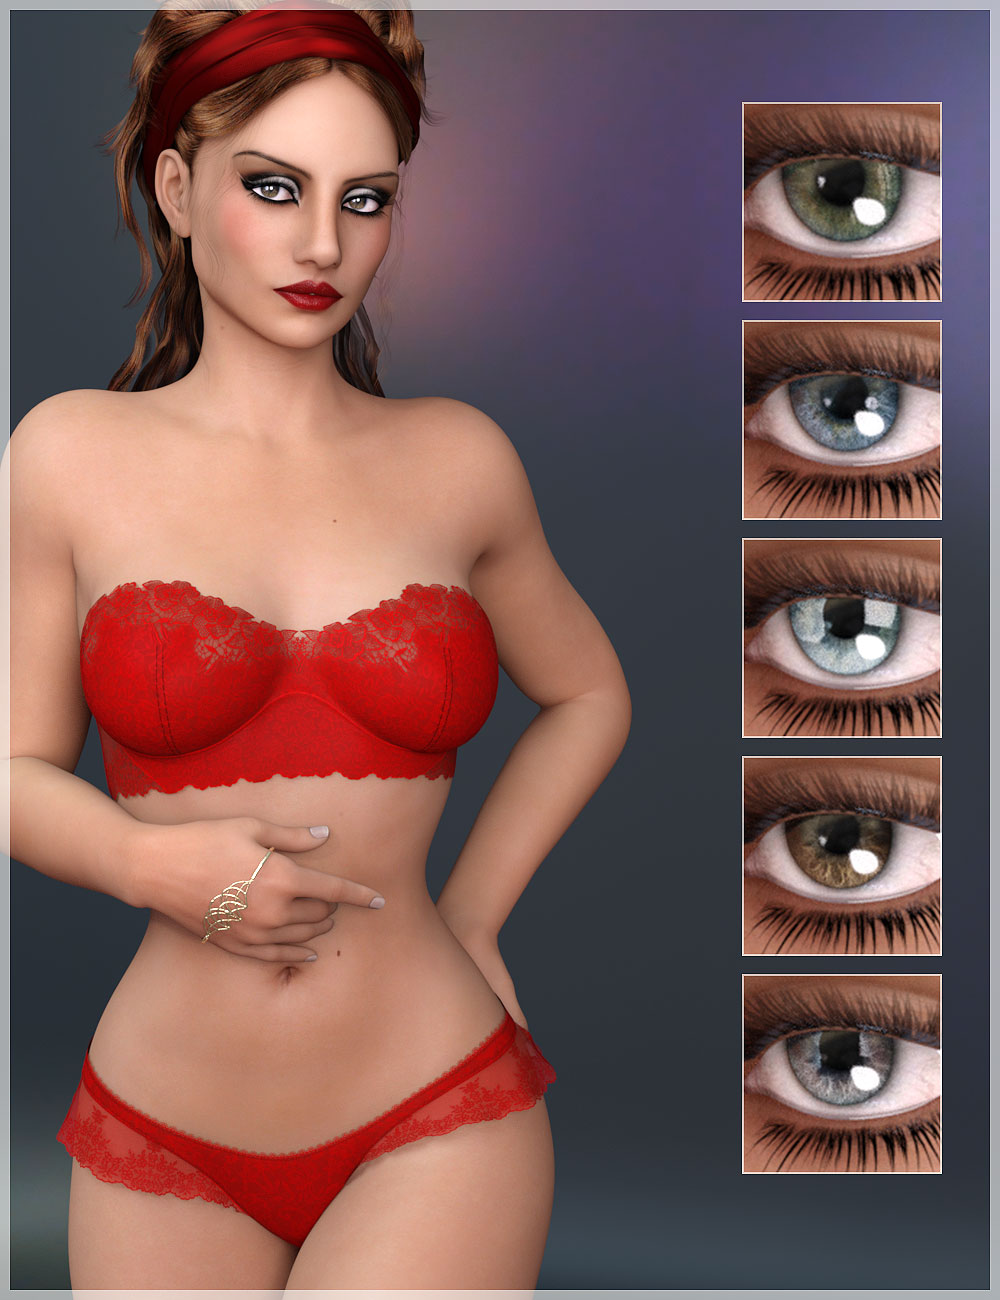 OZBD Niesha for Victoria 7 by: BelladzinesOziChick, 3D Models by Daz 3D